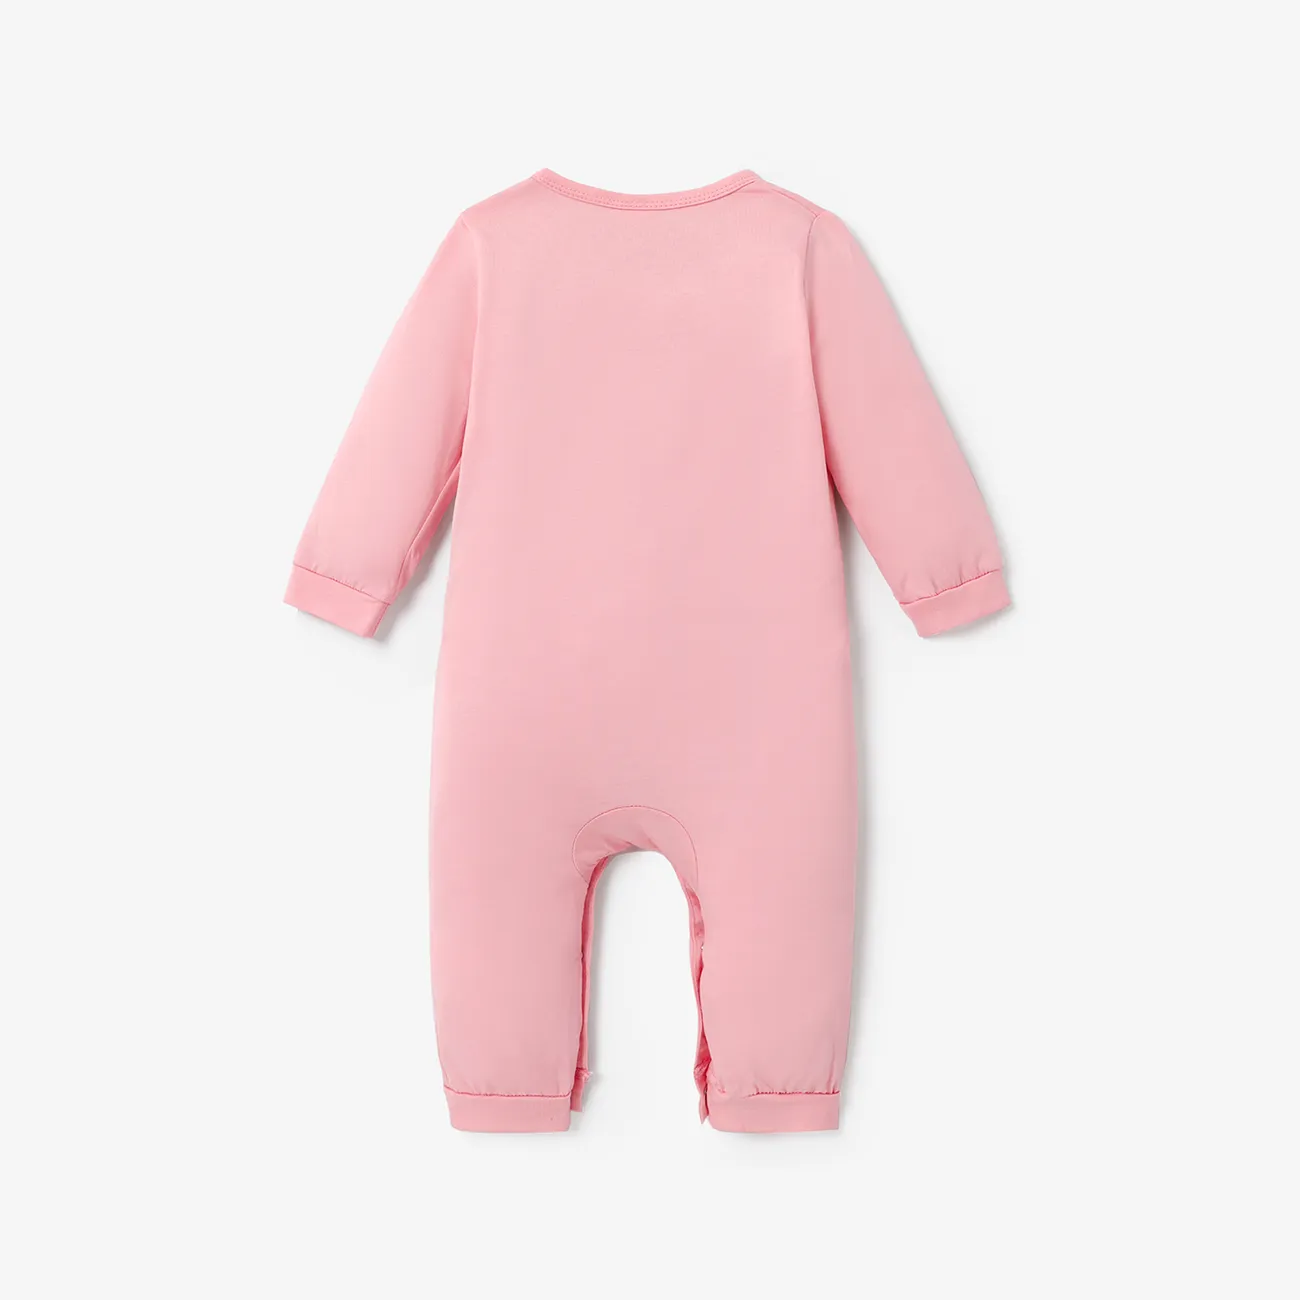 Muttertag Baby Unisex Basics Langärmelig Baby-Overalls rosa big image 1